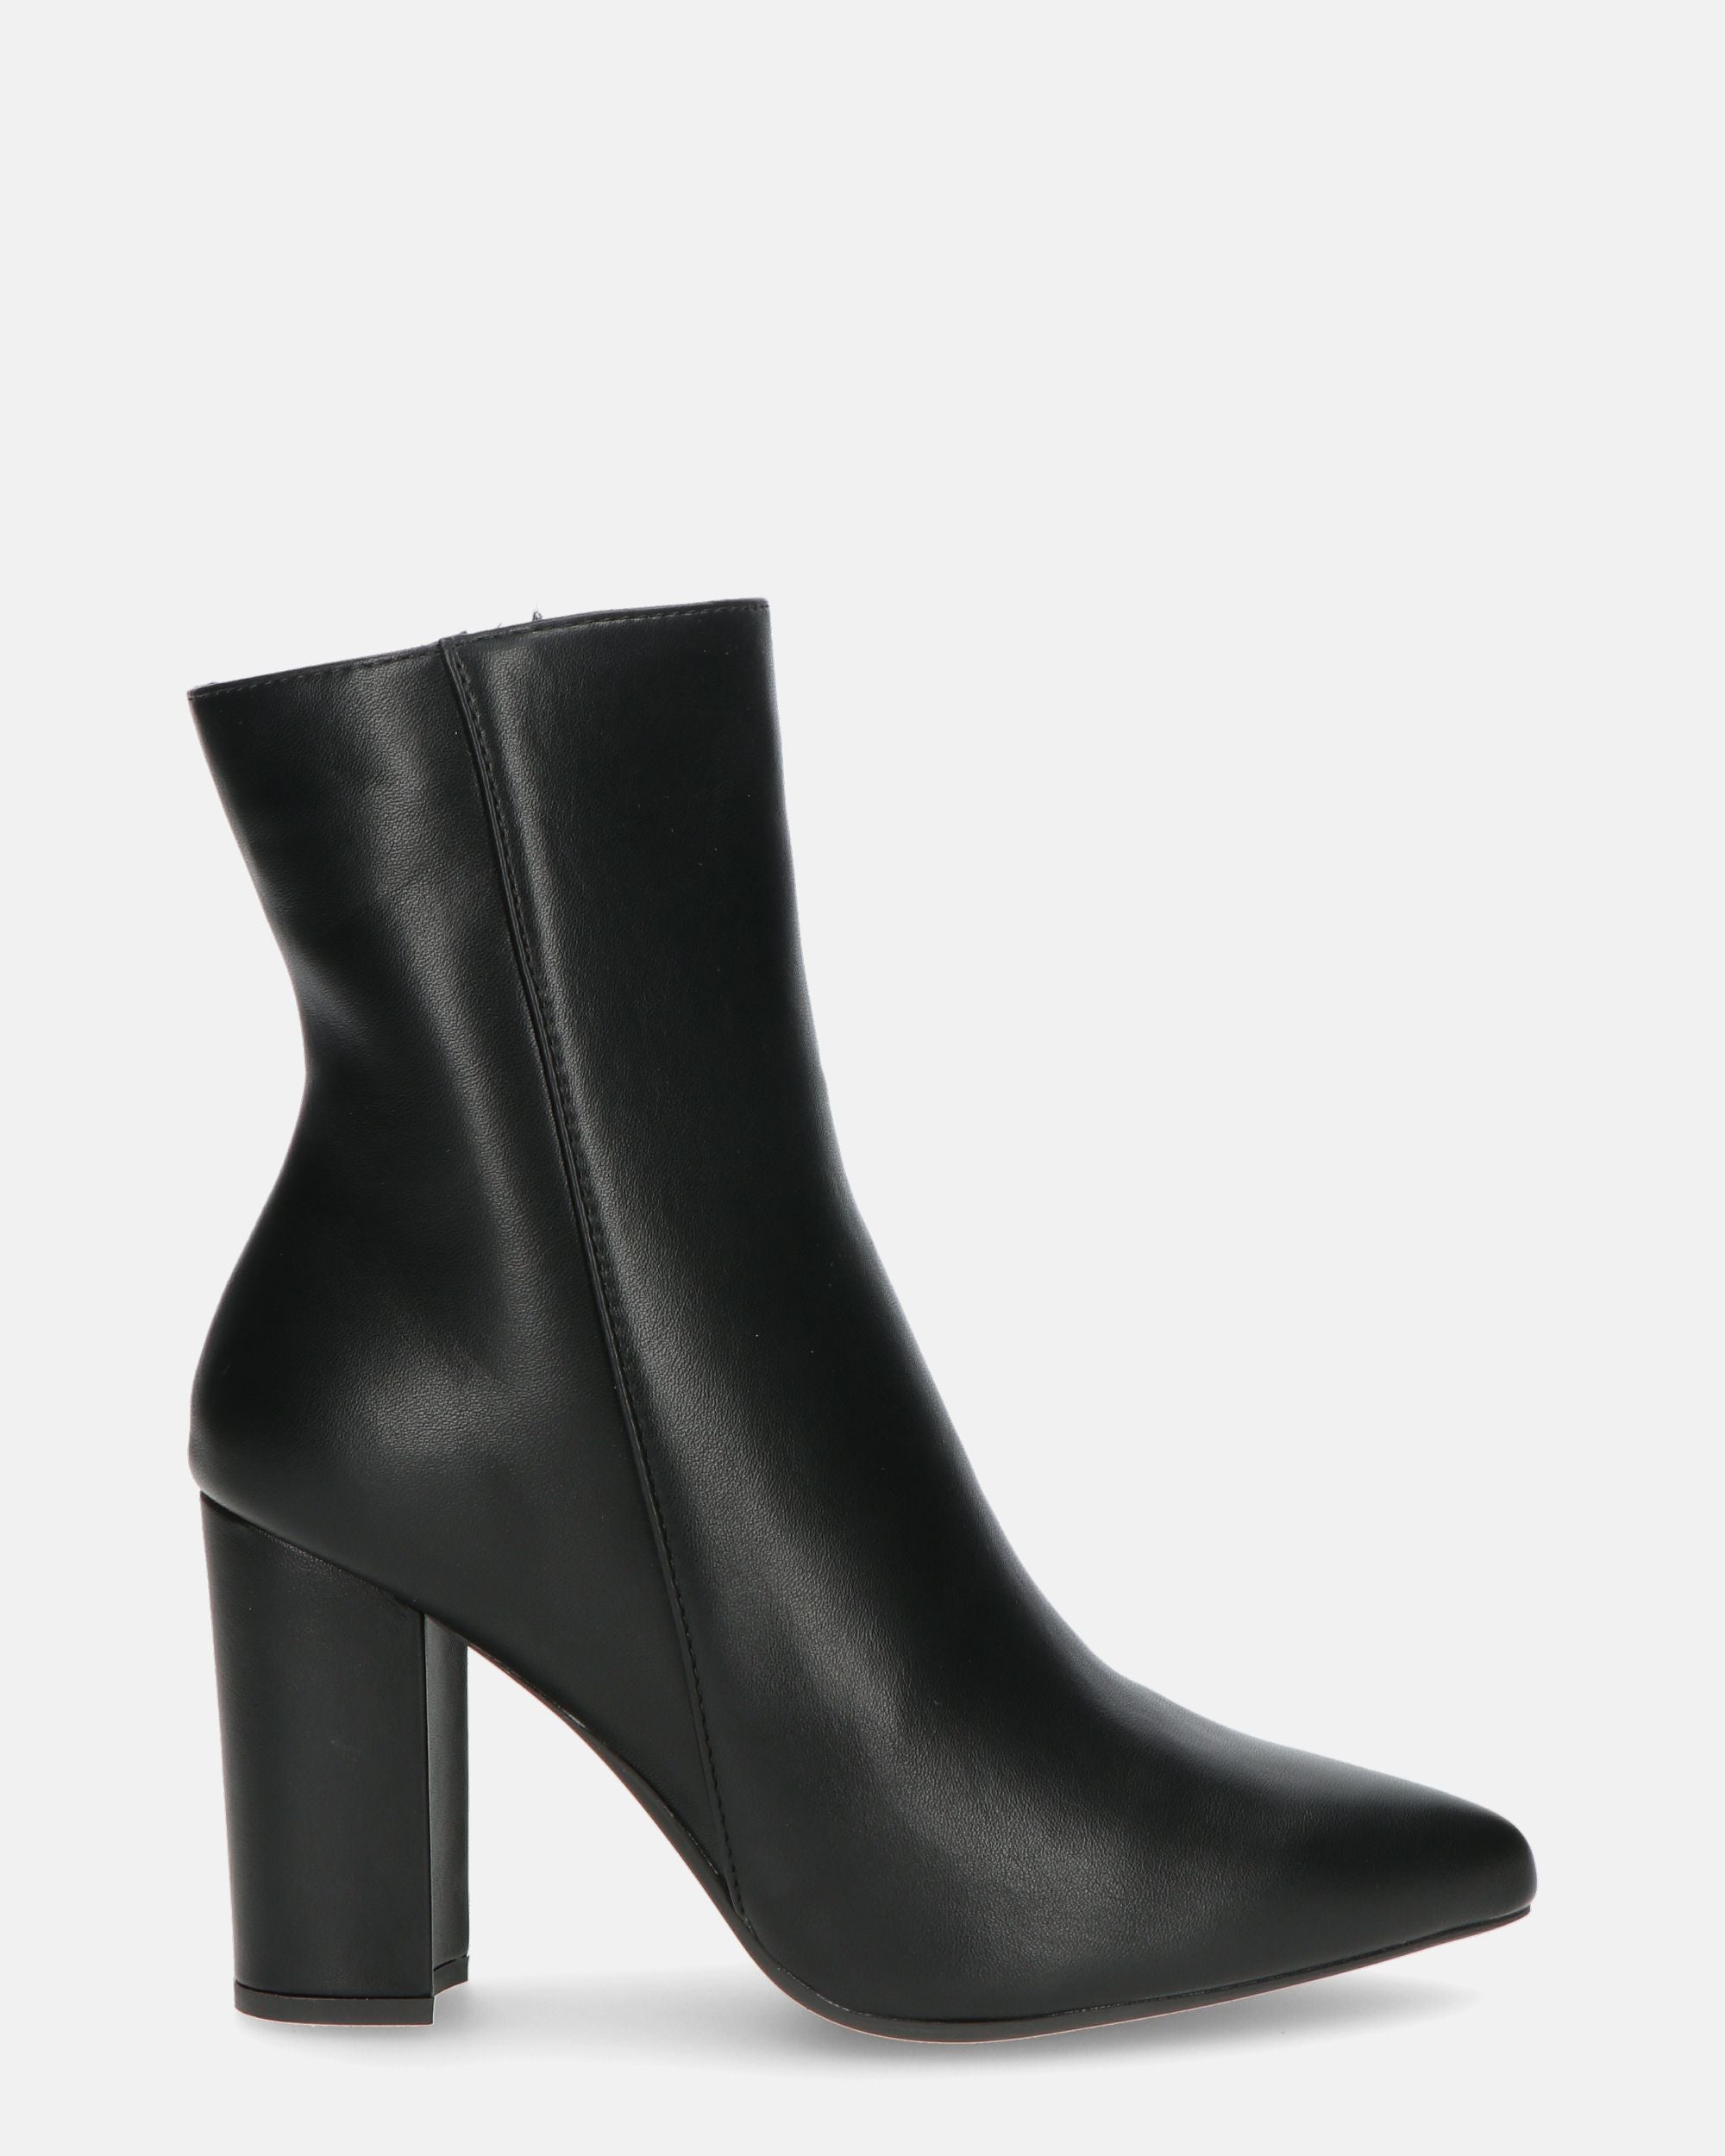 OLIVIA - black PU zipped ankle boots